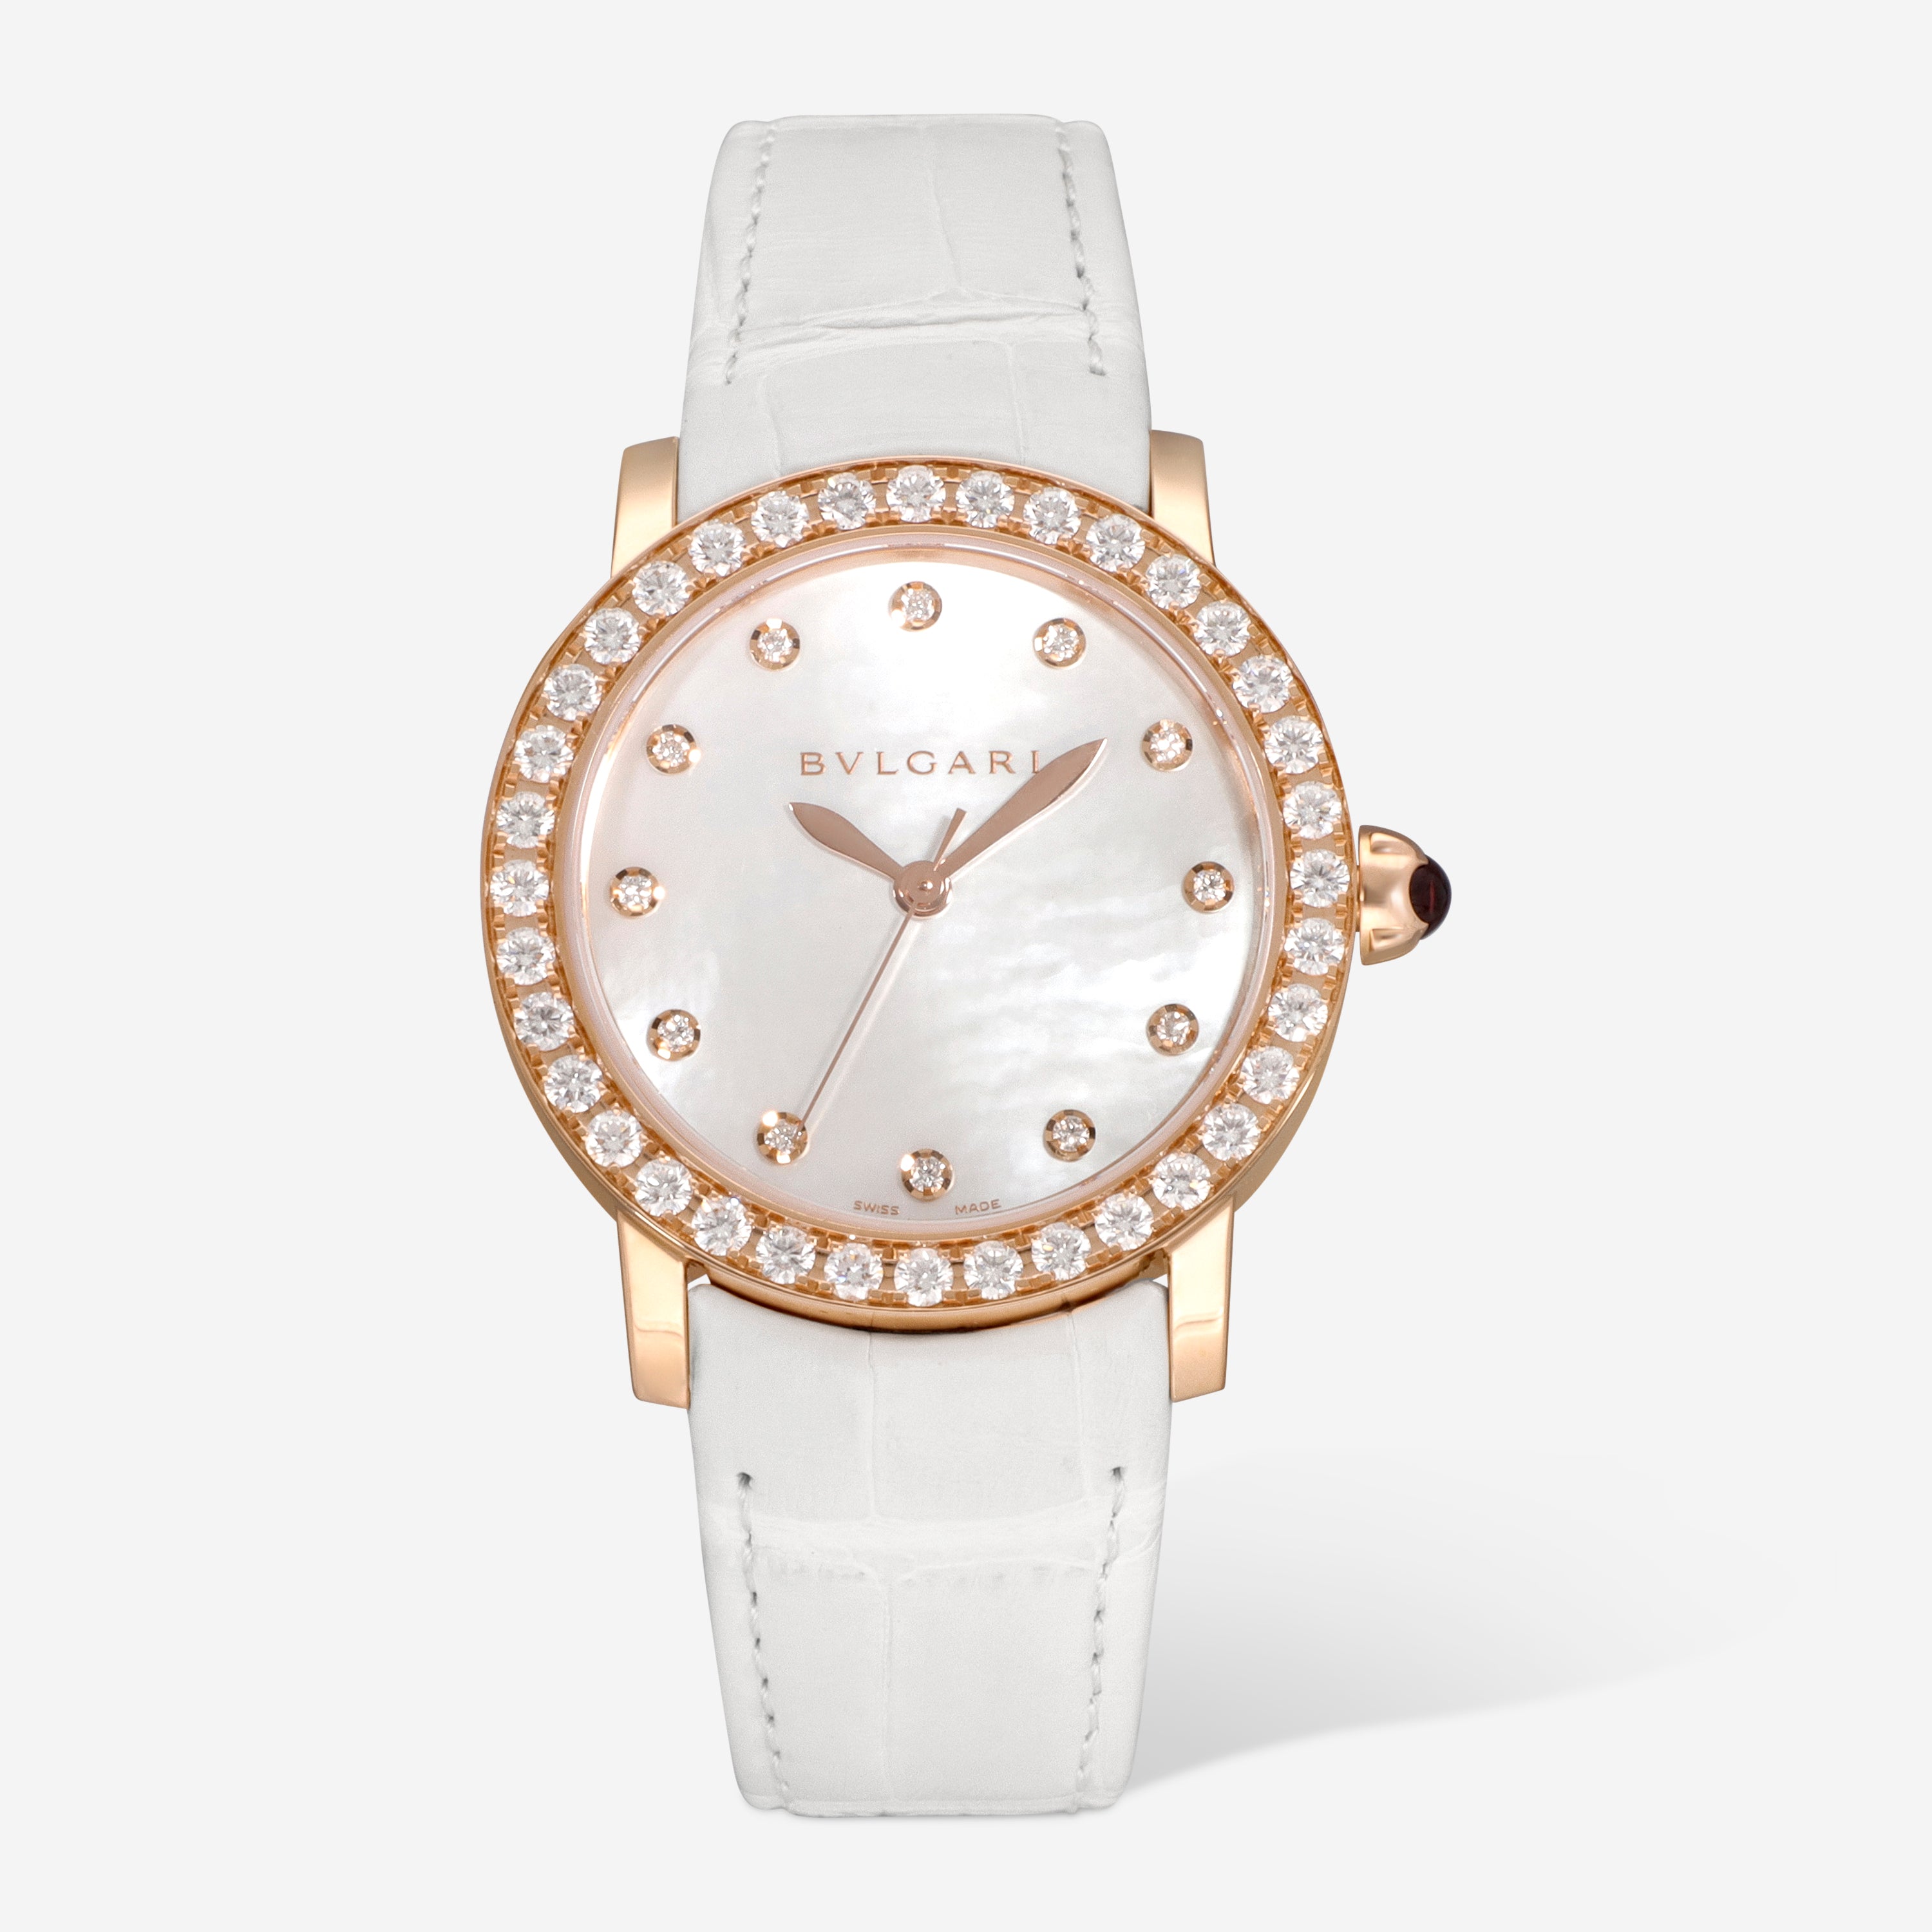 Bulgari Bulgari 18K Rose Gold Diamond Automatic Ladies Watch 102089 - THE SOLIST